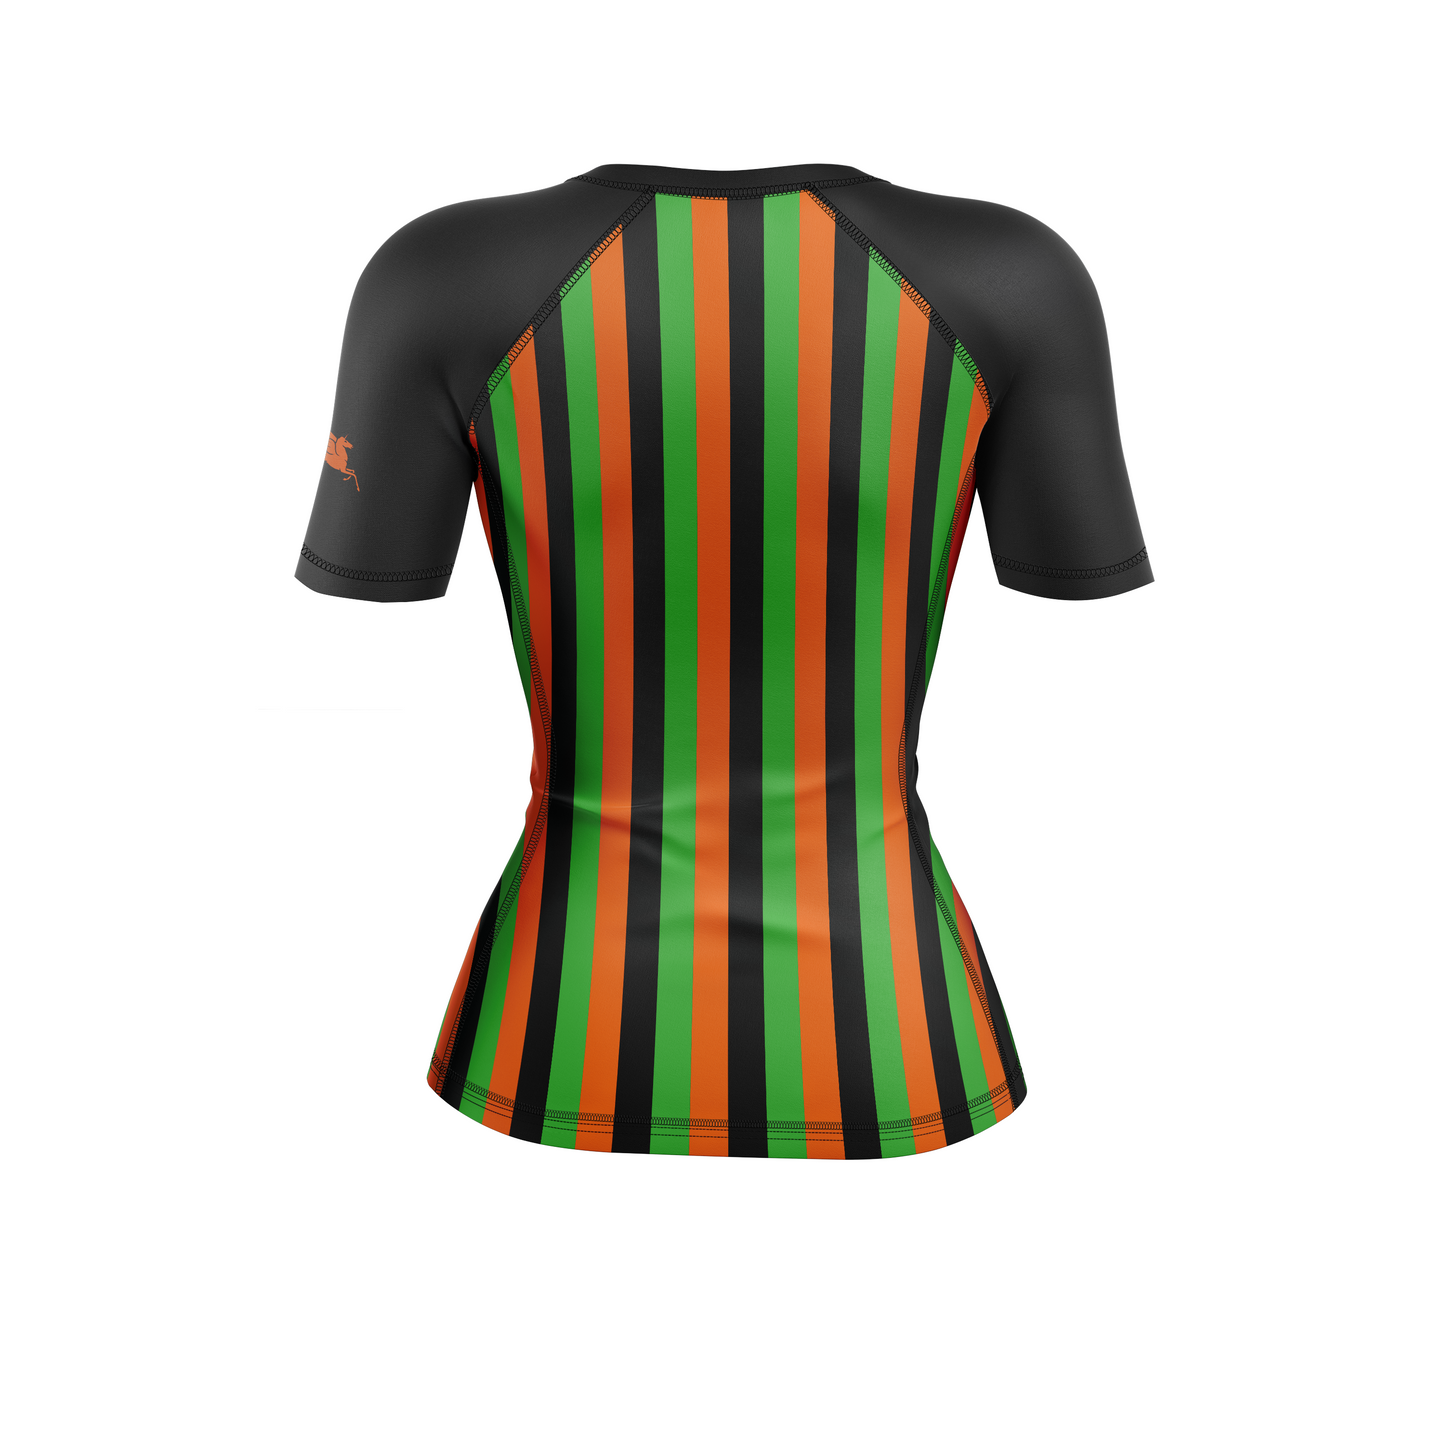 CCFC women's rash guard Golciaga United, black orange and green